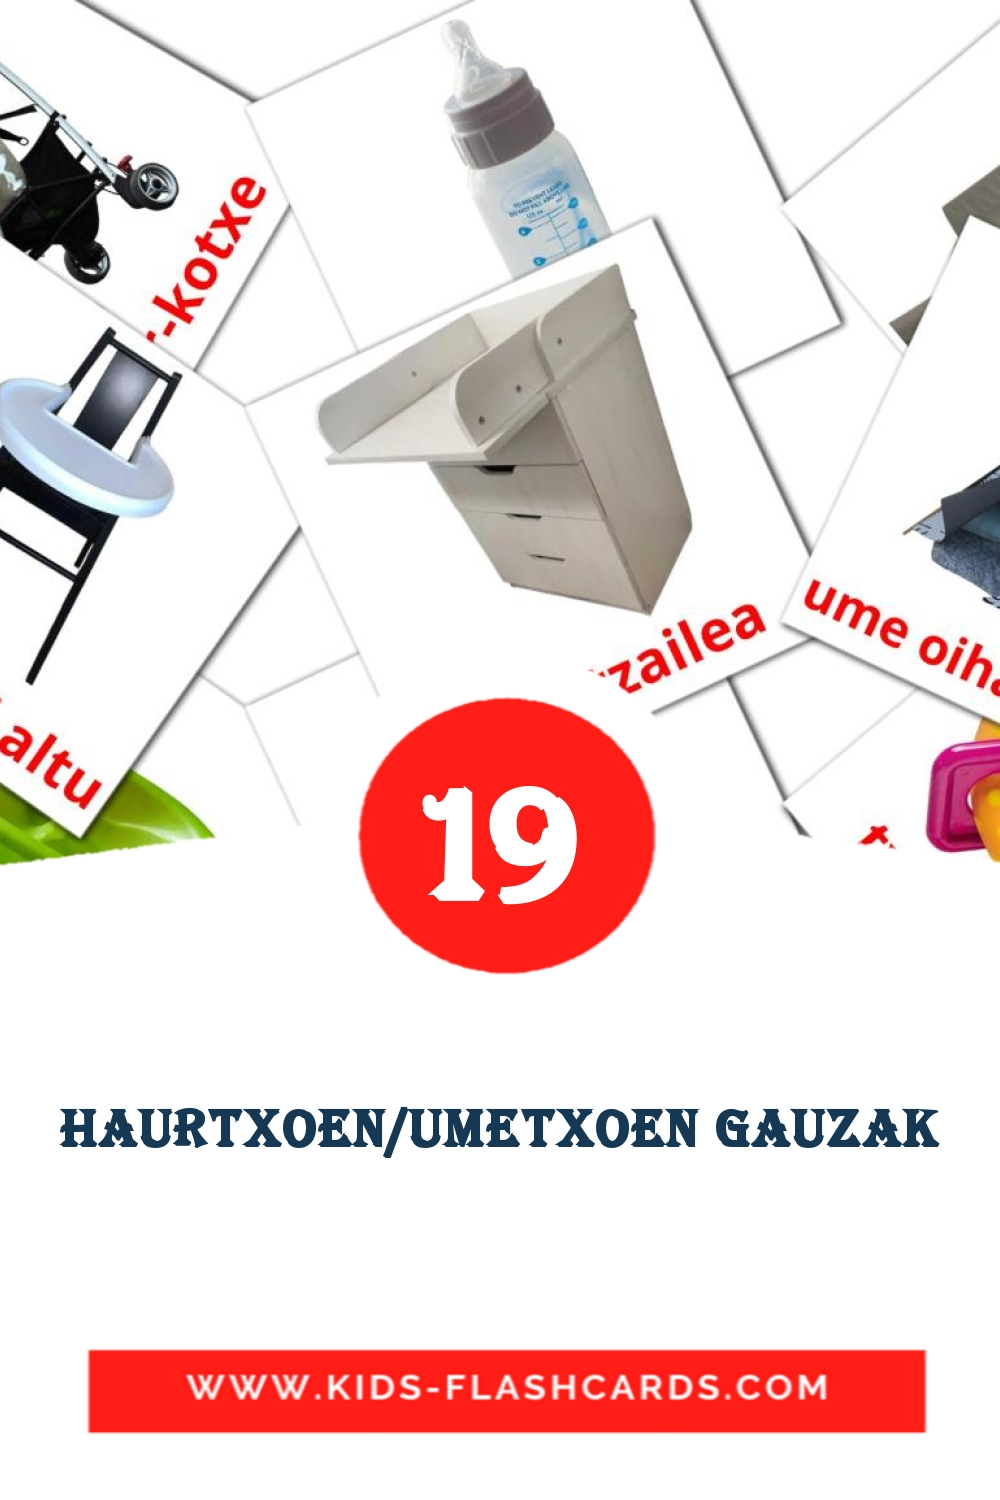 19 Haurtxoen/Umetxoen gauzak Picture Cards for Kindergarden in basque